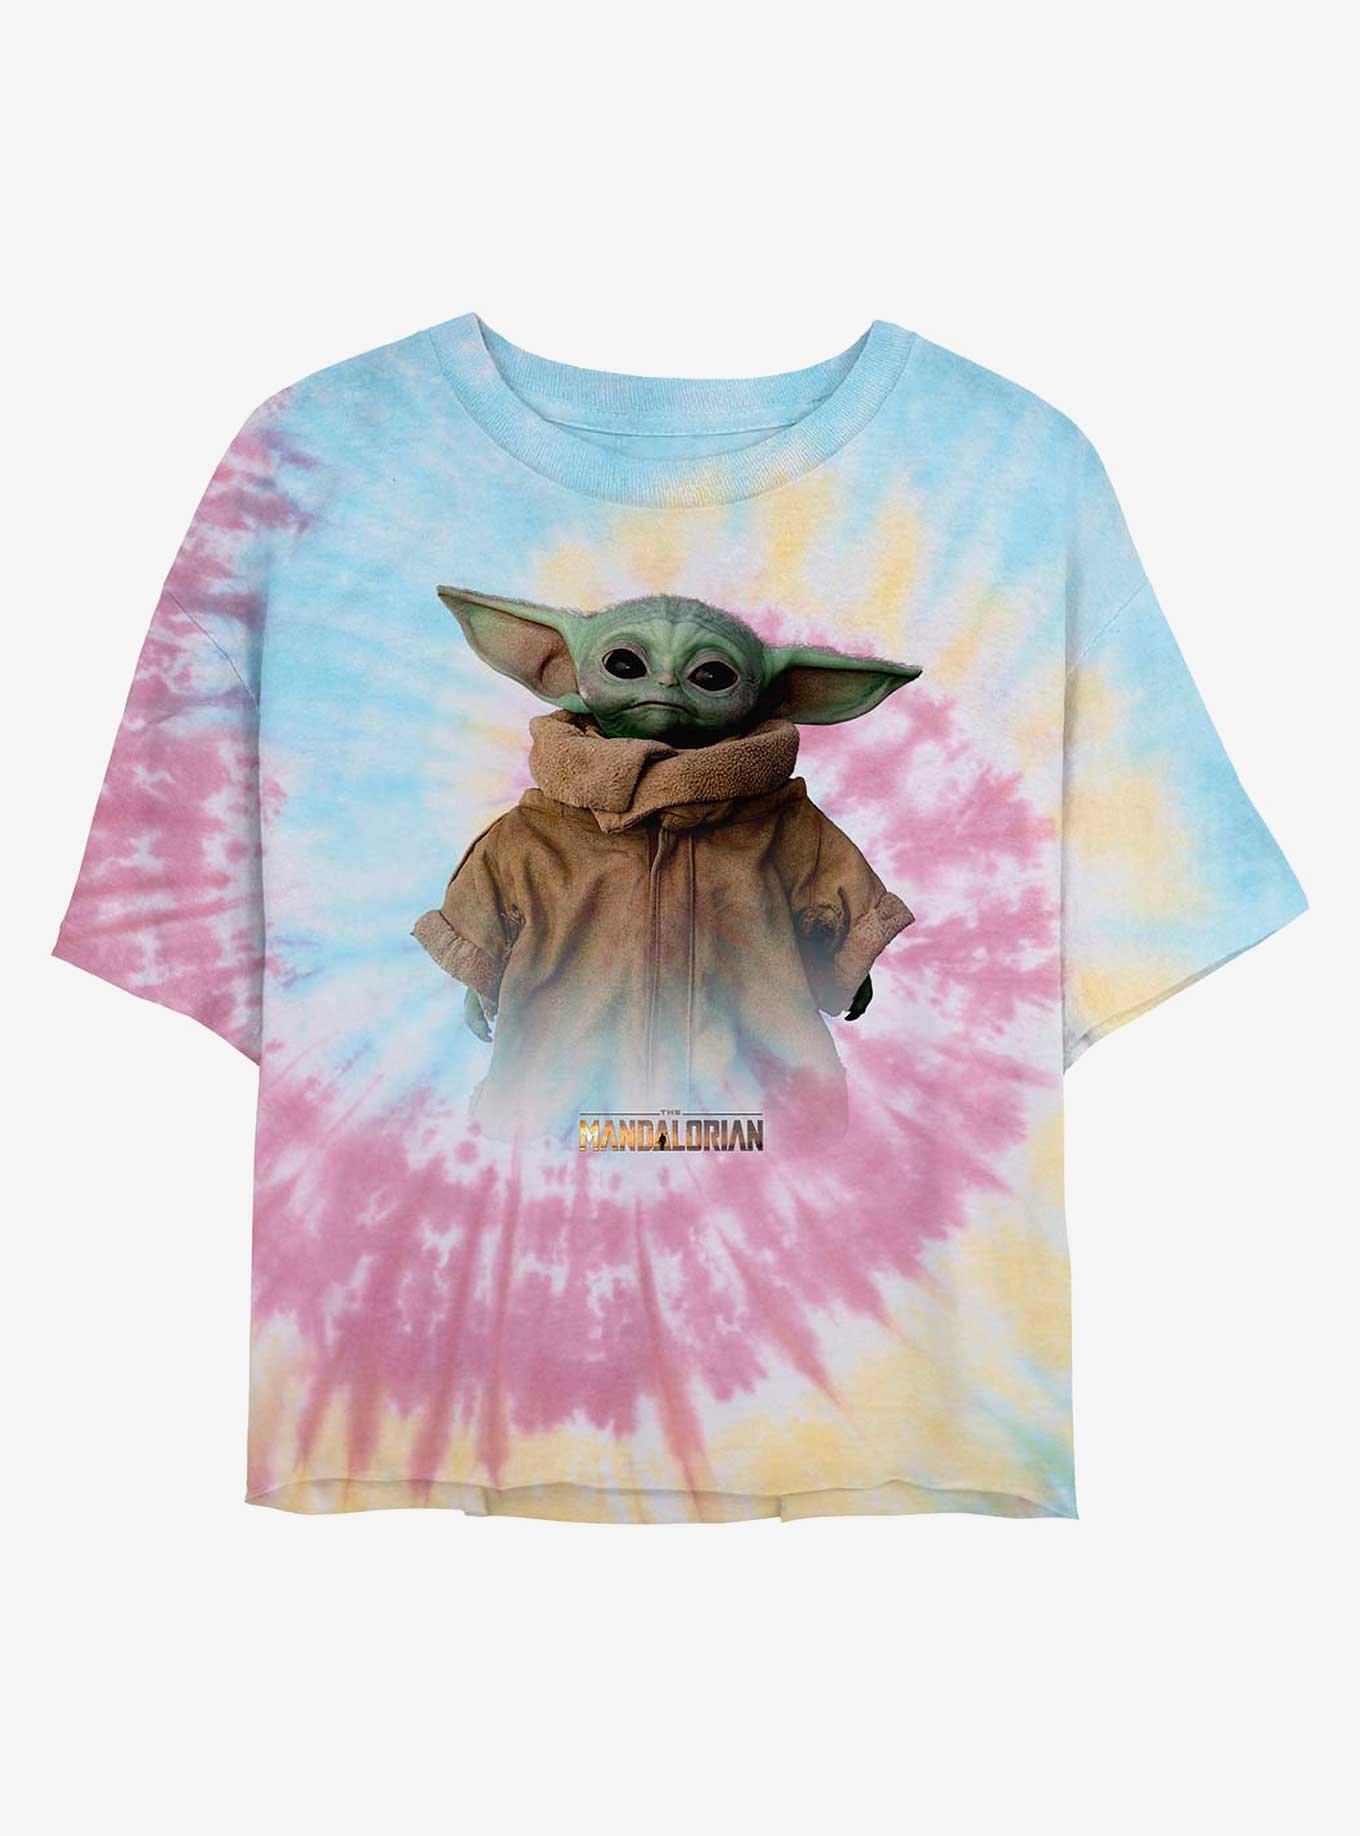 Star Wars The Mandalorian Child Tie Dye Crop Girls T-Shirt